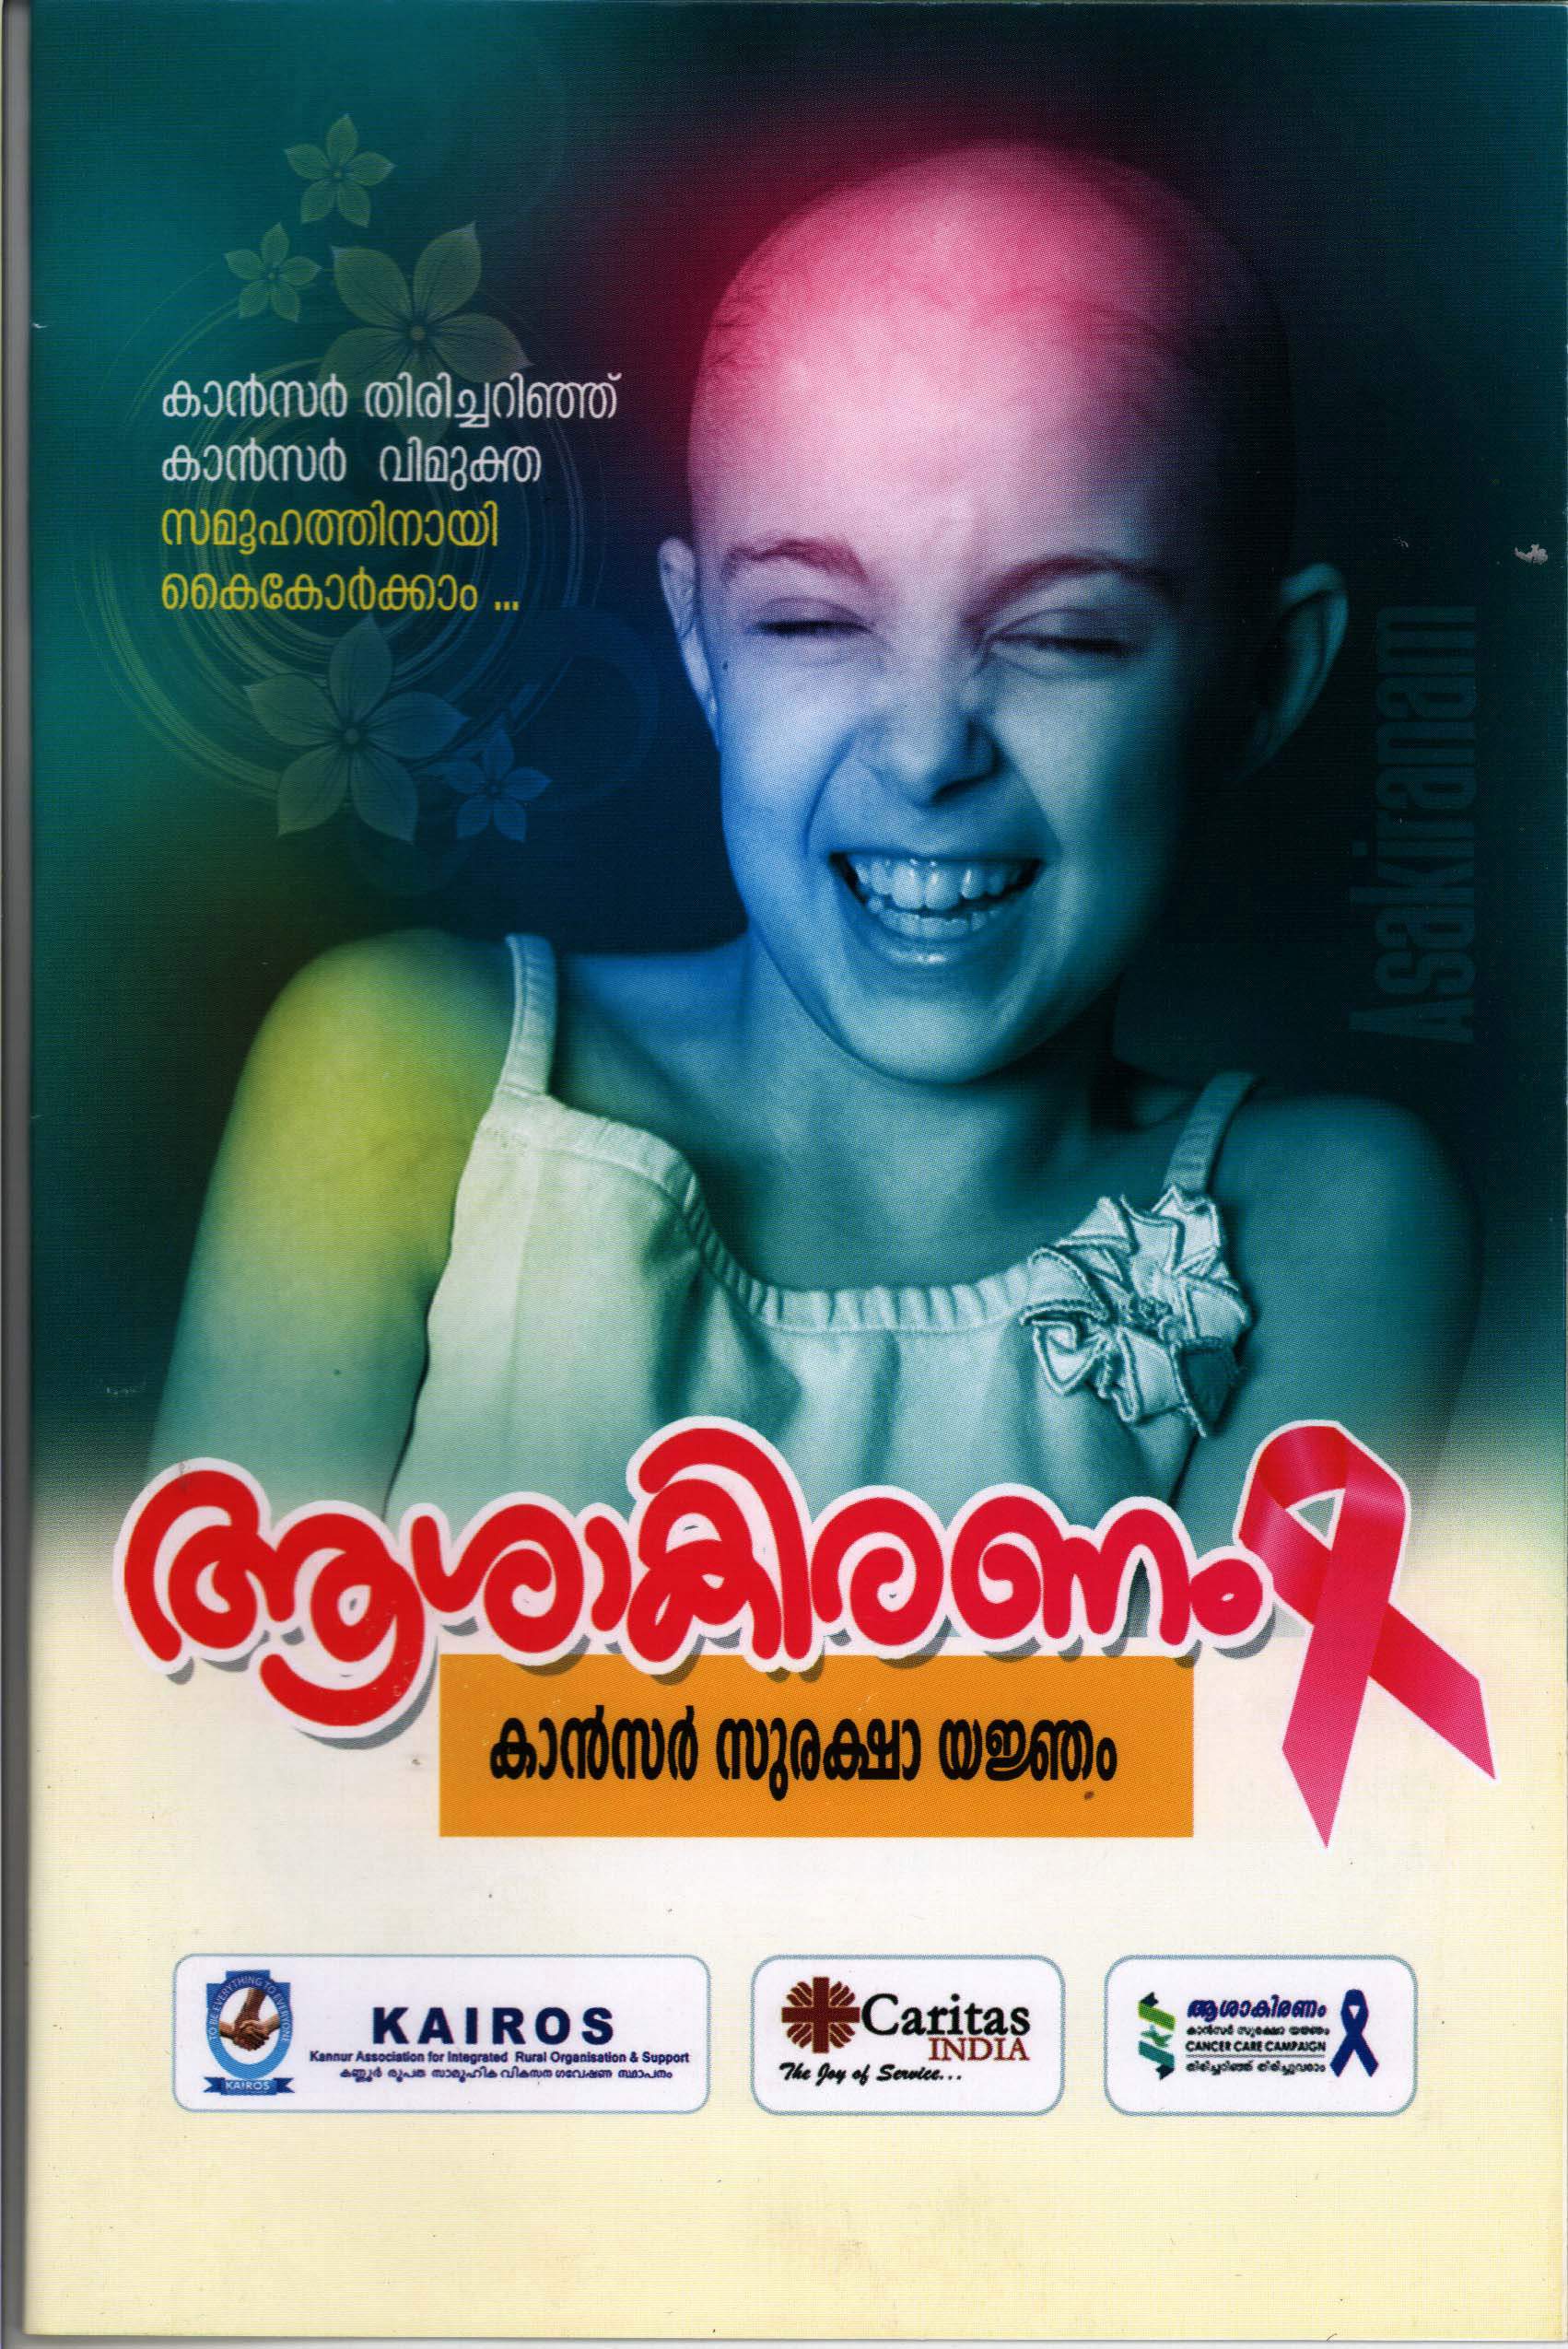 Asakiranam (Cancer Protection Campaign)